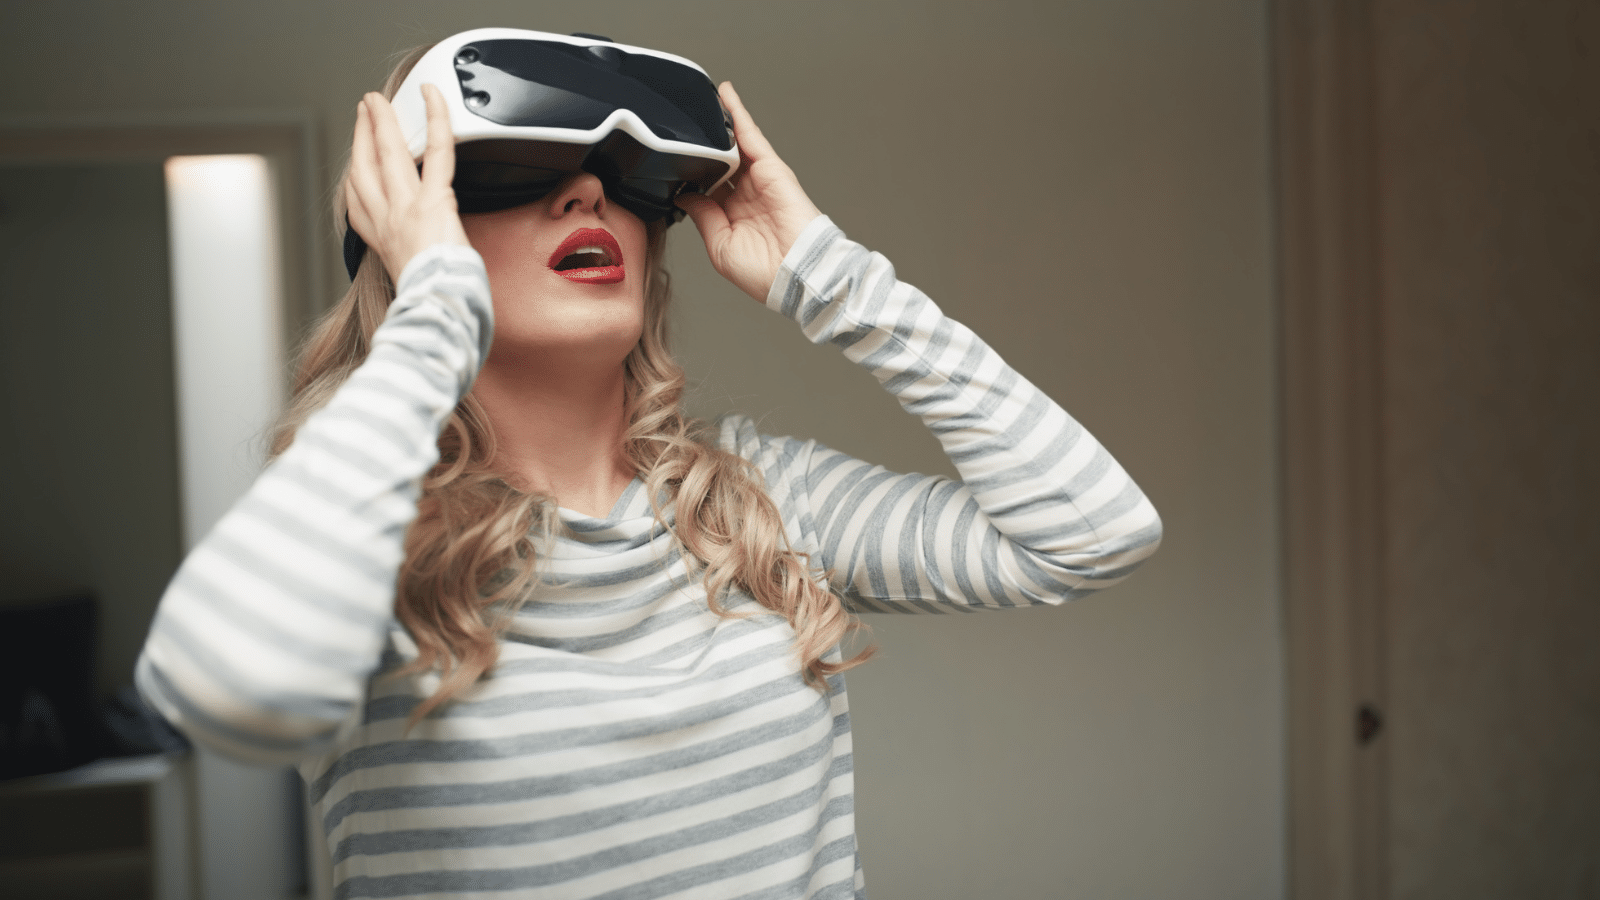 A woman using a virtual reality headset.